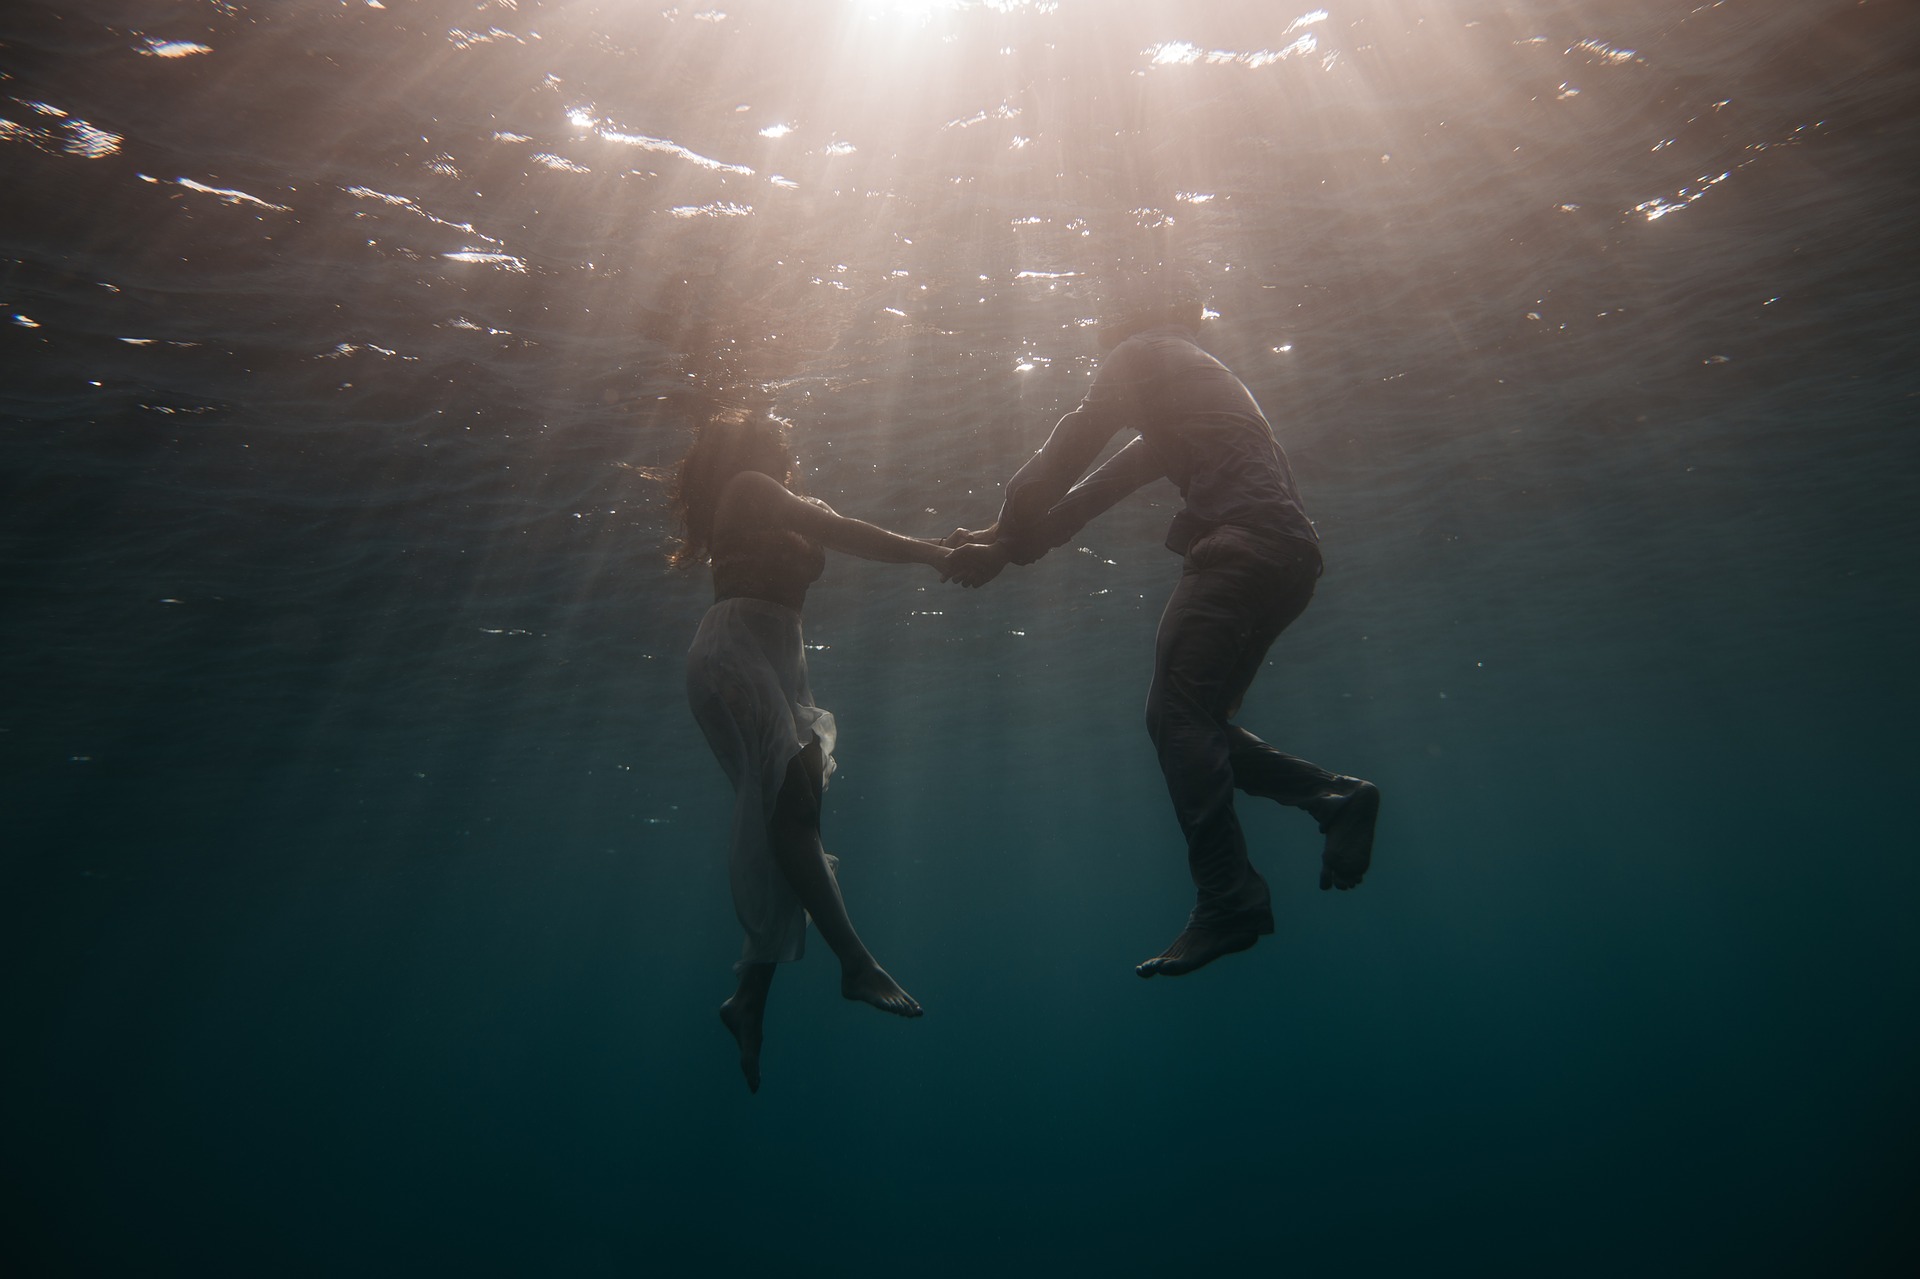 Couple swimming underwater in sea, lake